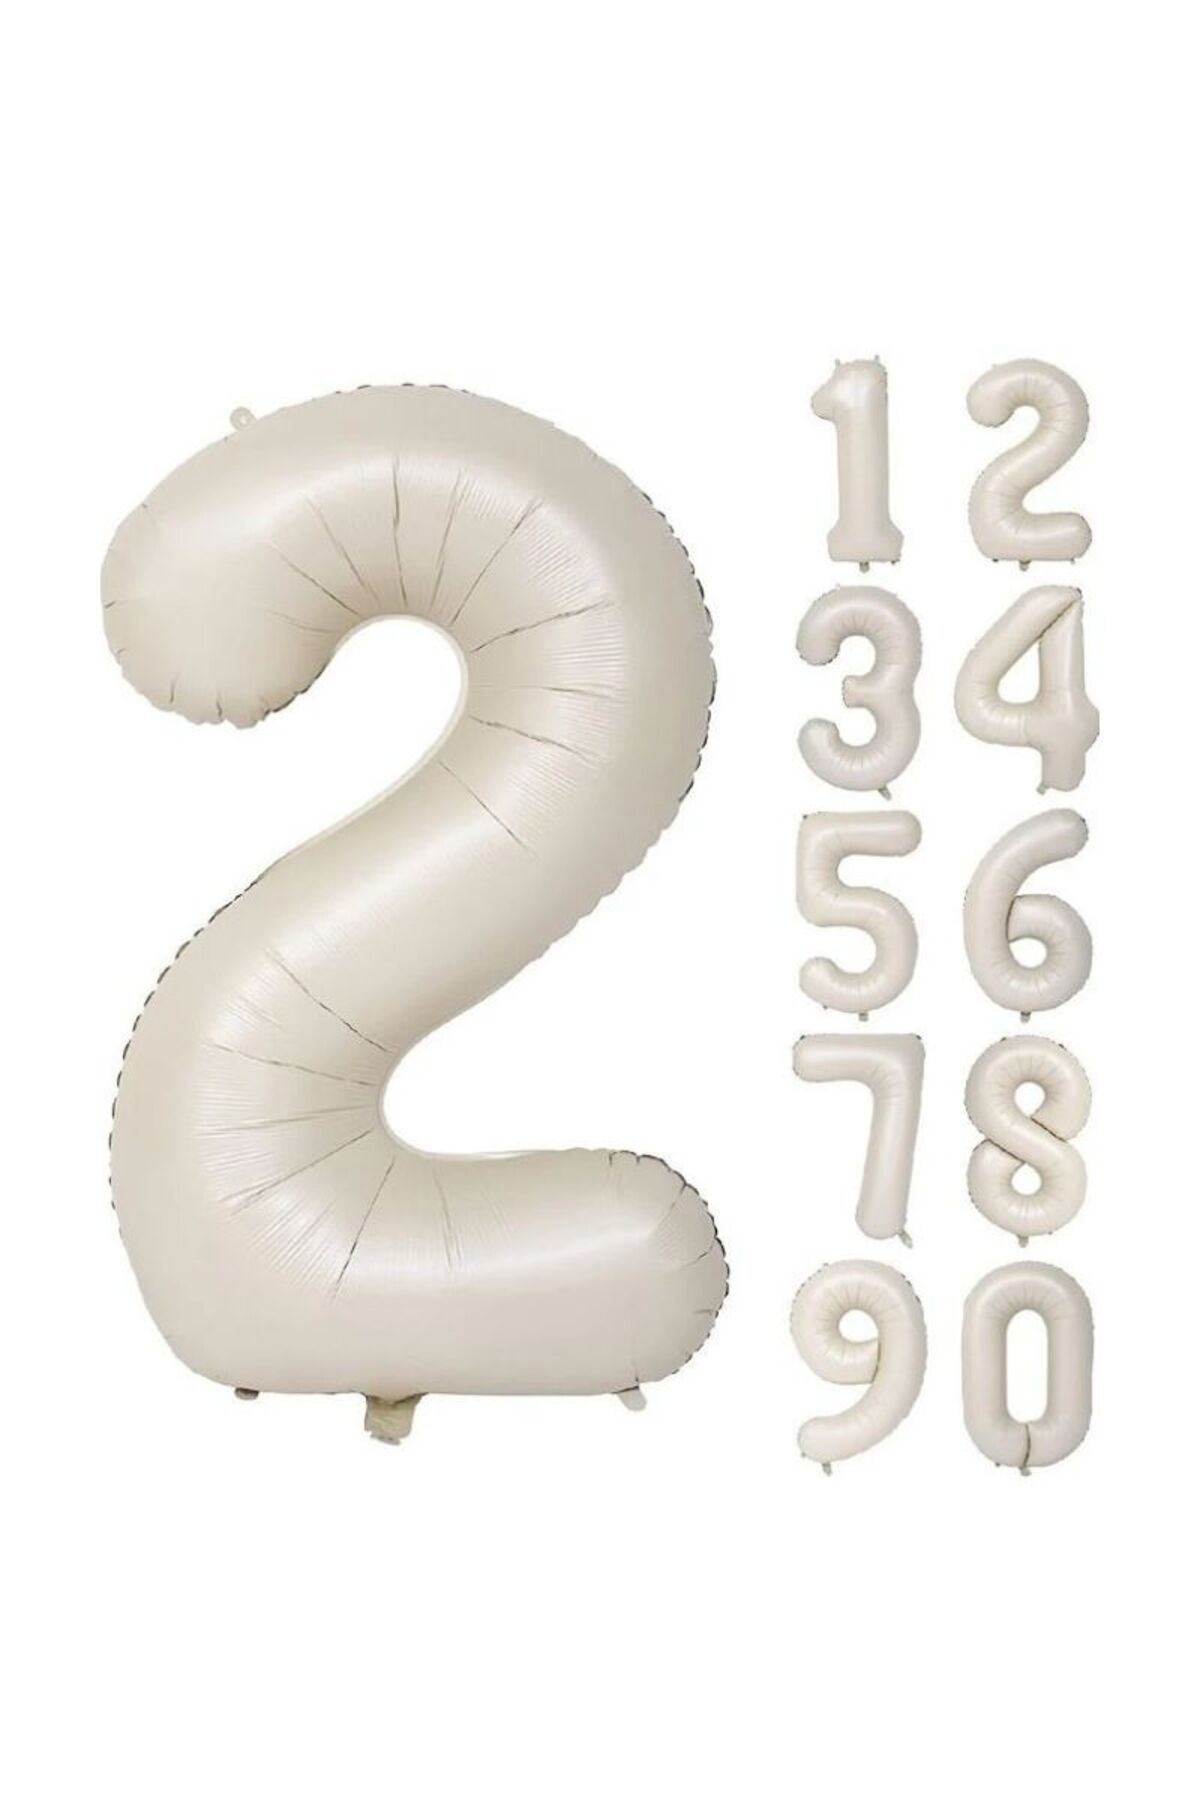 Onay Store Folyo Balon 2 Rakamı Helyum Balon 76 Cm Krem Renk - 2 Yaş Balon - 2 Rakam Balon-deniz Kumu-bej Rengi